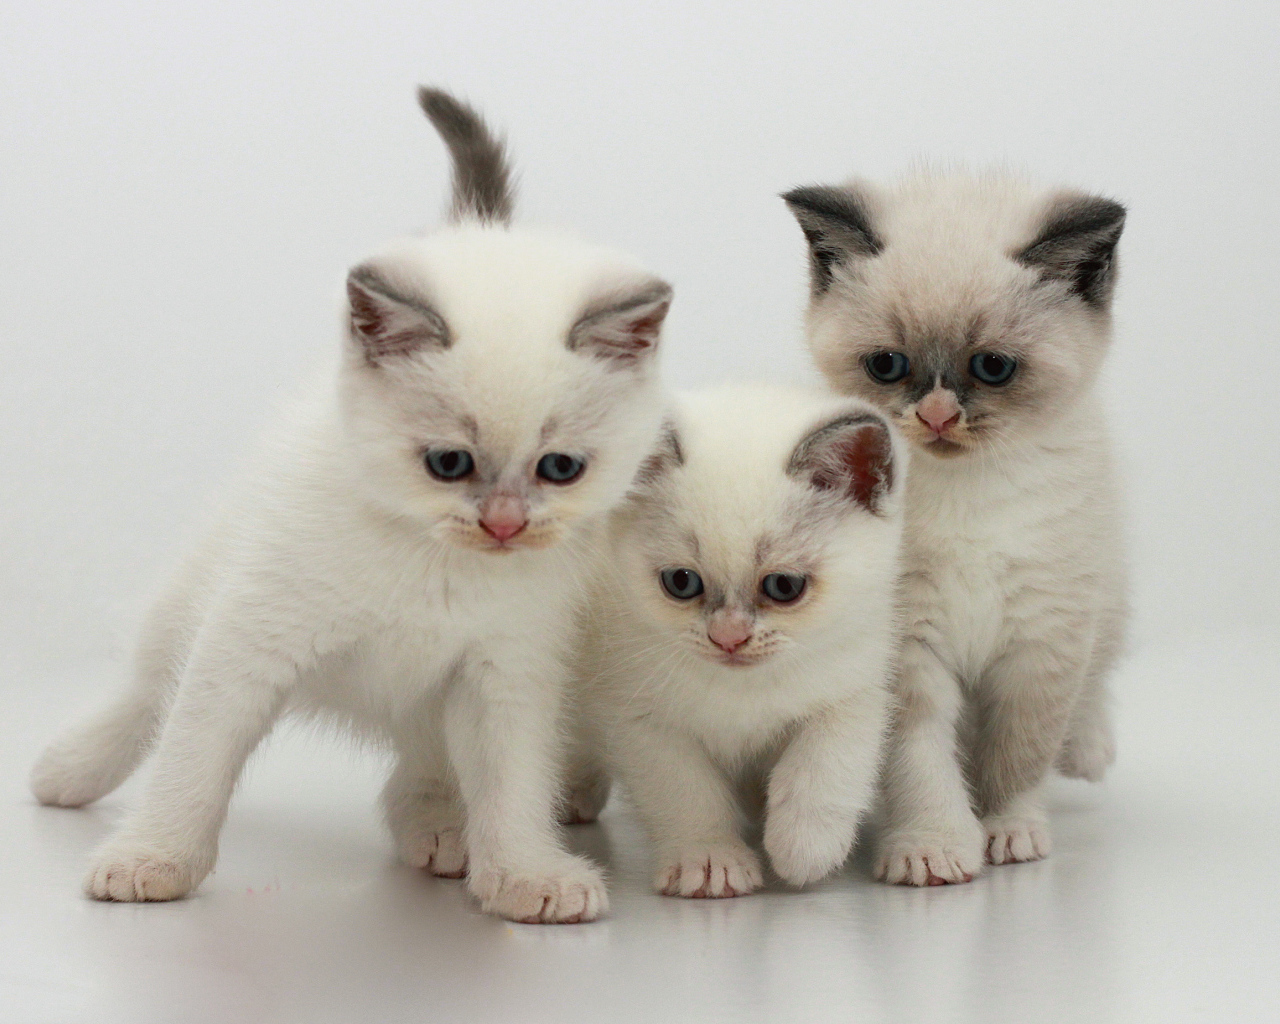 Три котенка бурмилла